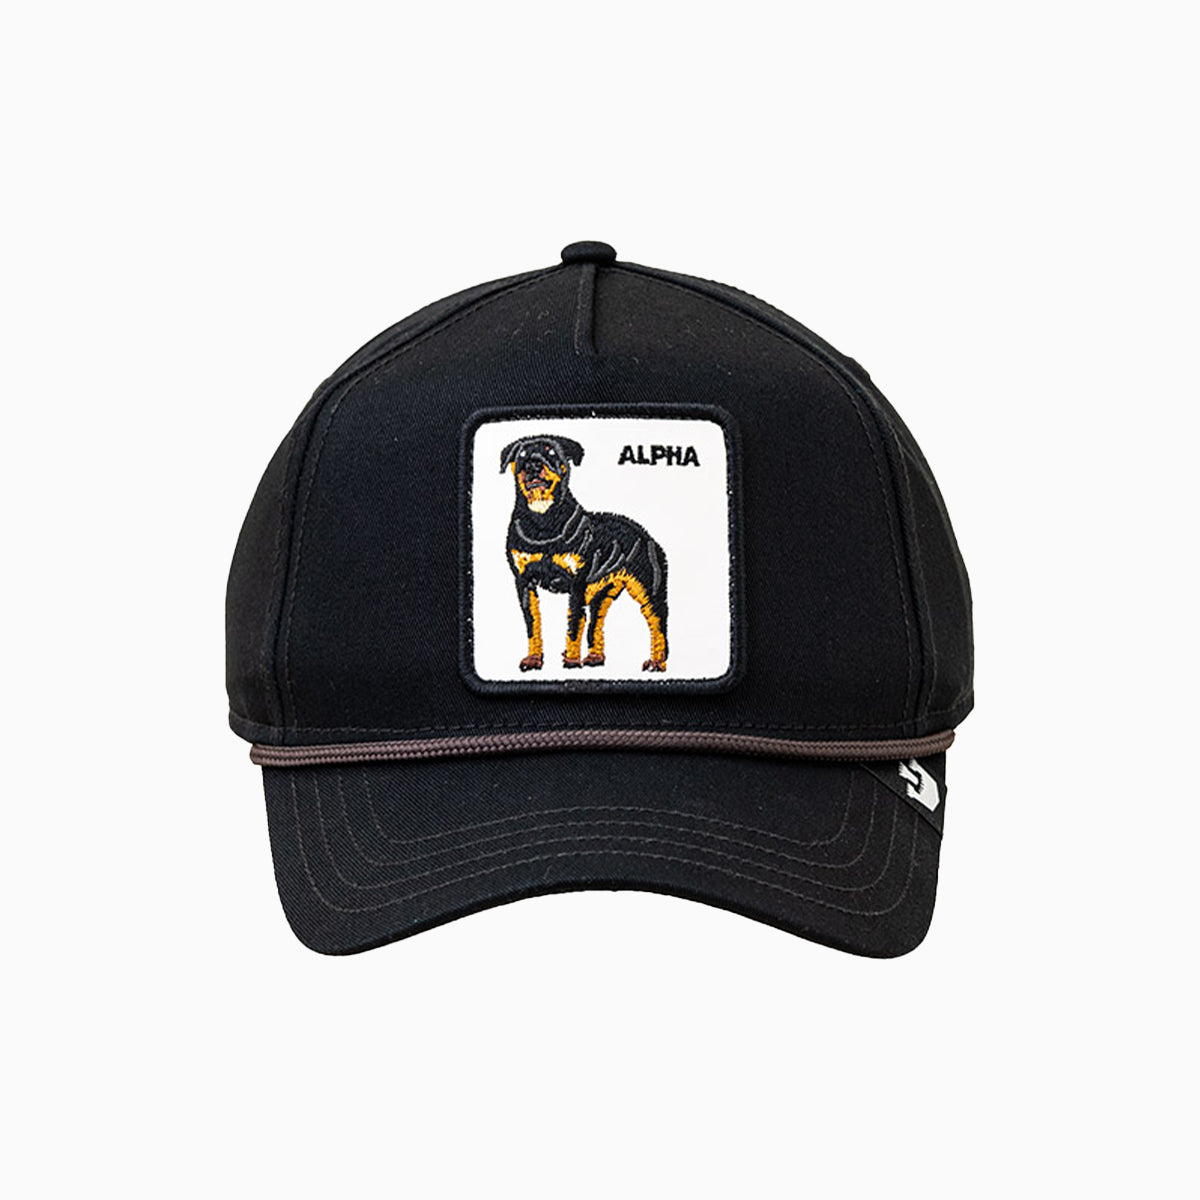 The Alpha Dog 100 Trucker Hat